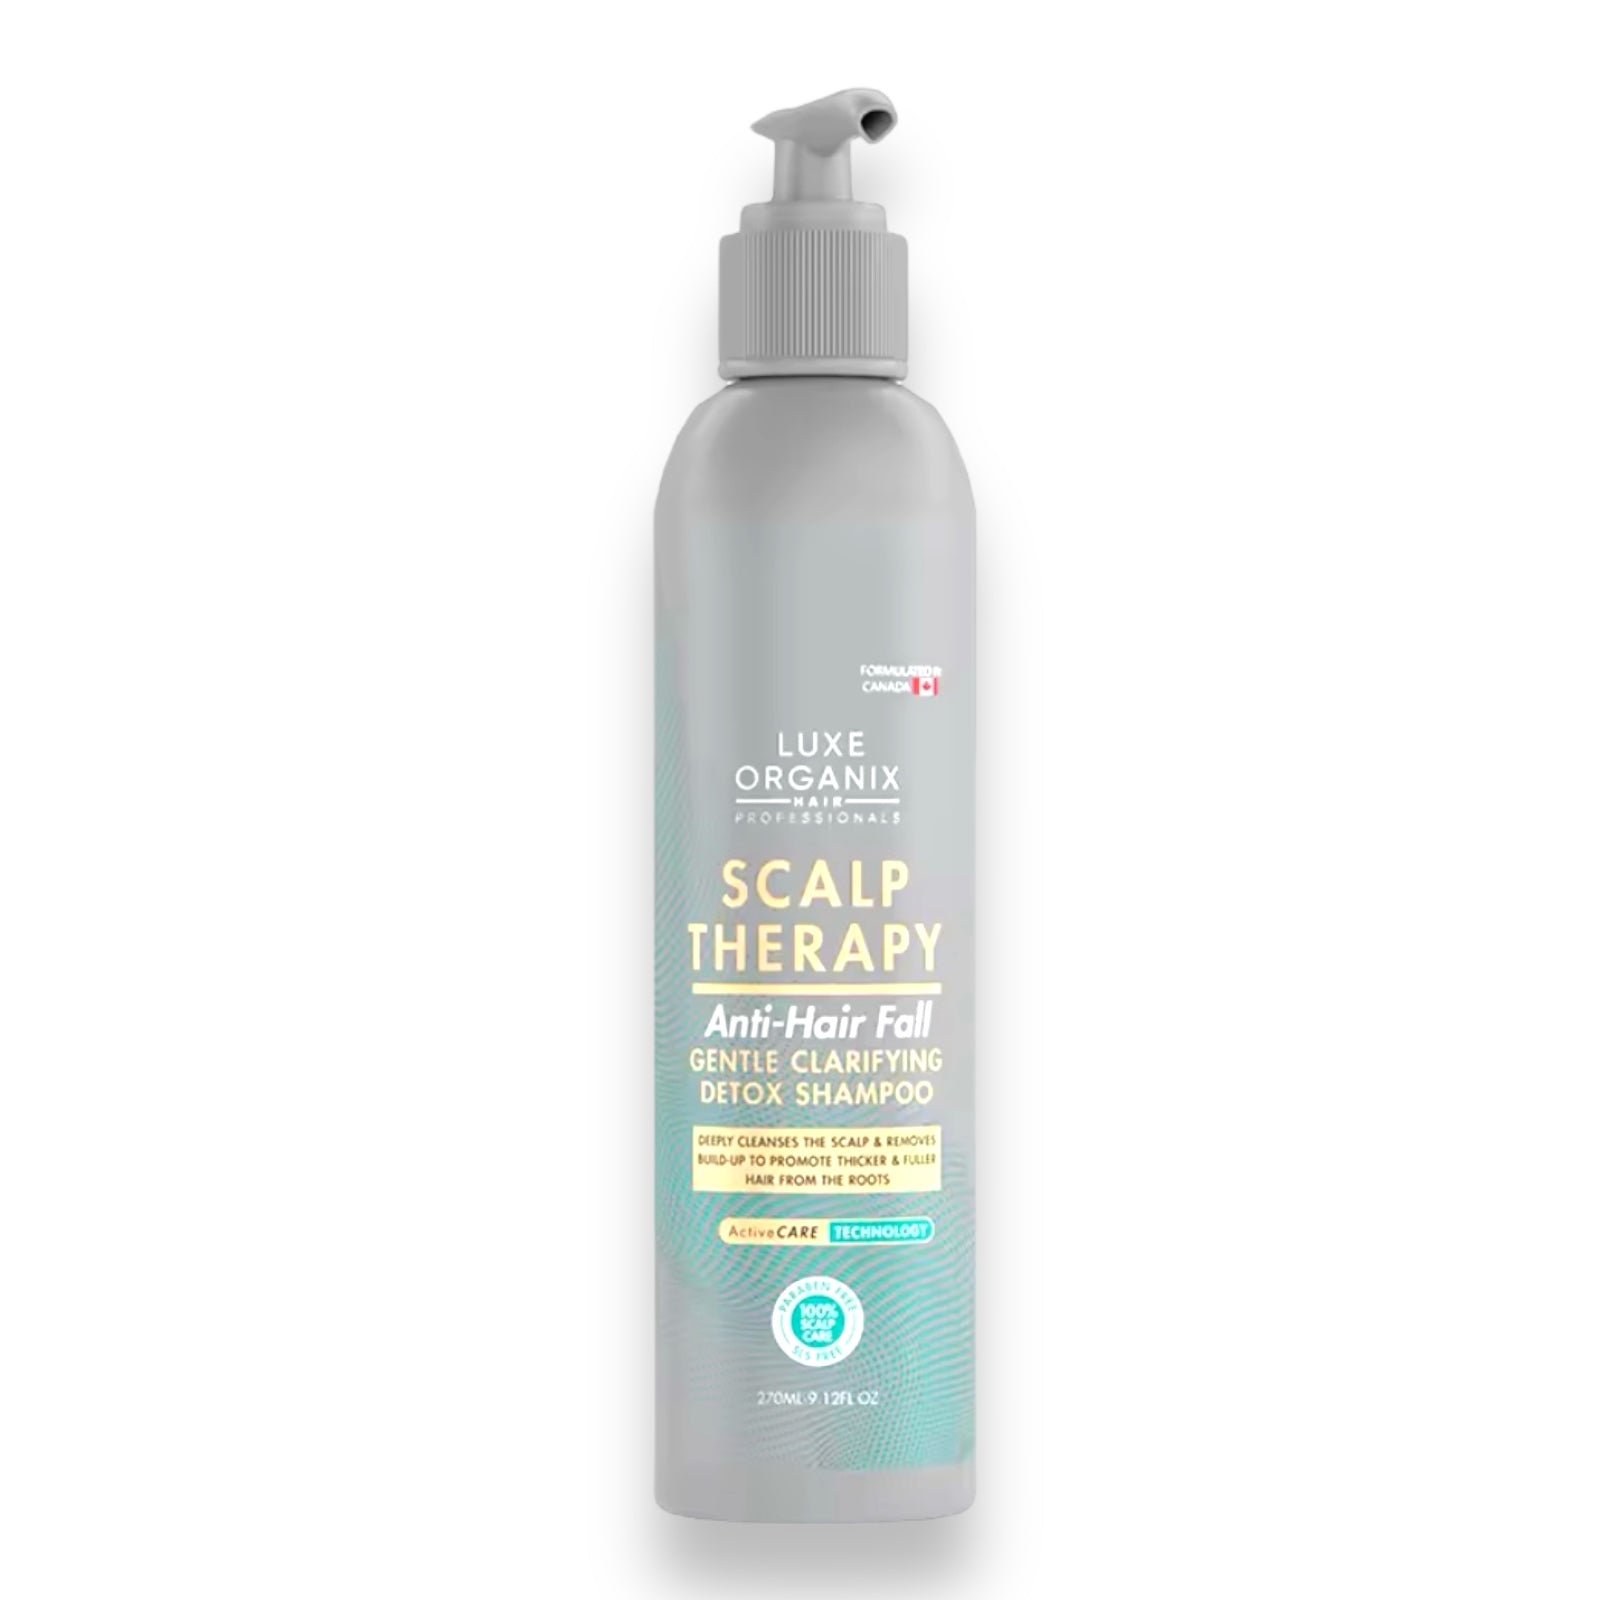 LUXE ORGANIX - Scalp Therapy Anti-Hair Fall Gentle Clarifying Detox Shampoo 270 ml ( SHAMPOO )